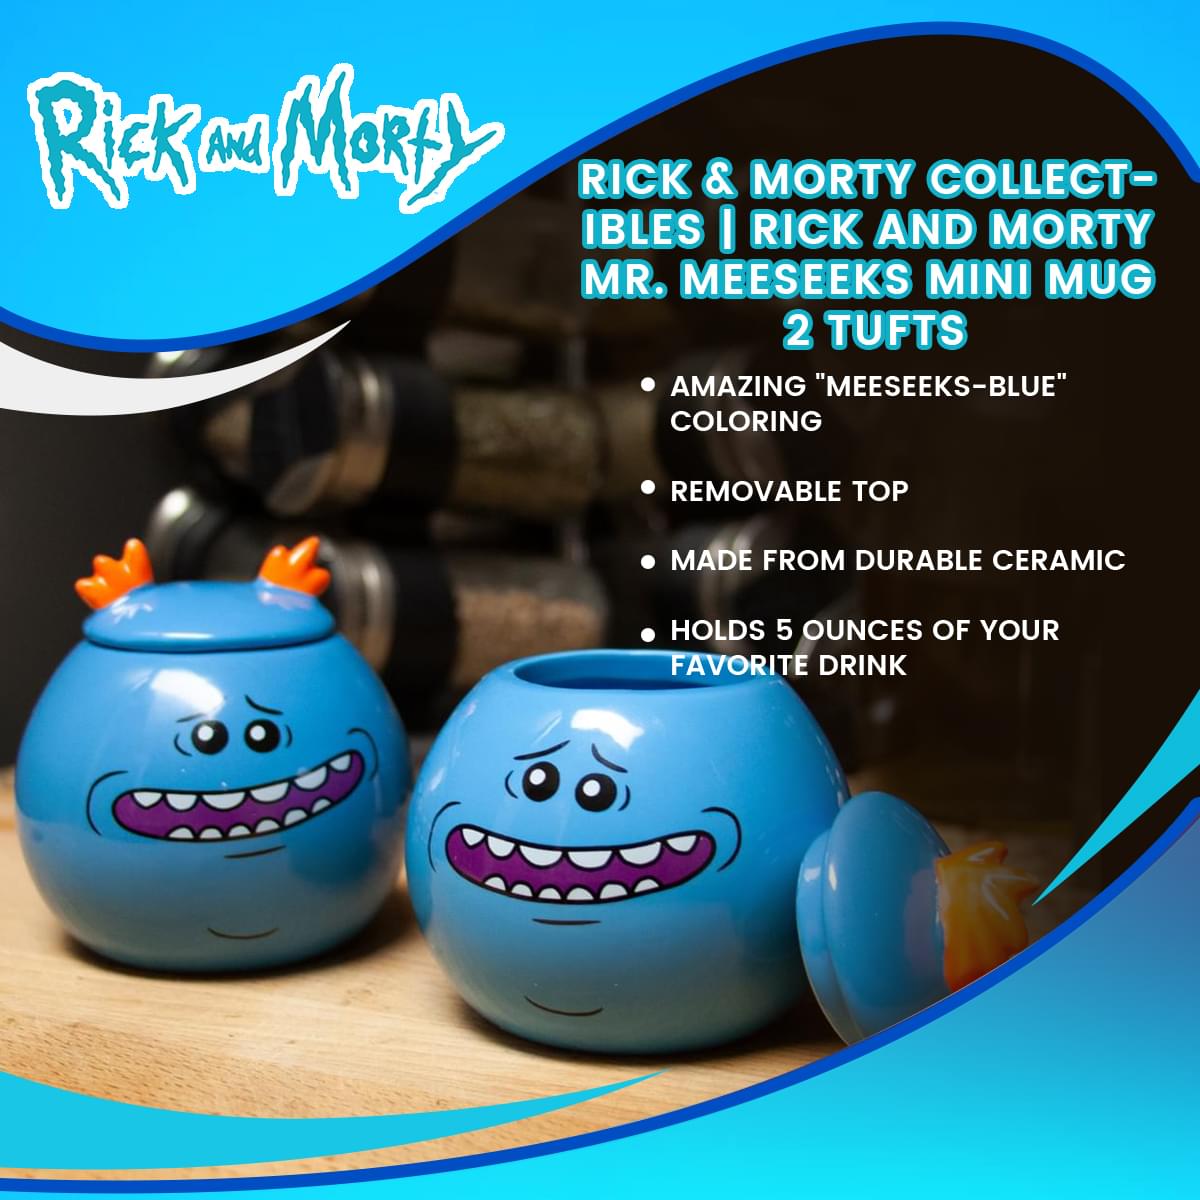 Rick & Morty Collectibles | Rick and Morty Mr. Meeseeks Mini Mug | 2 Tufts